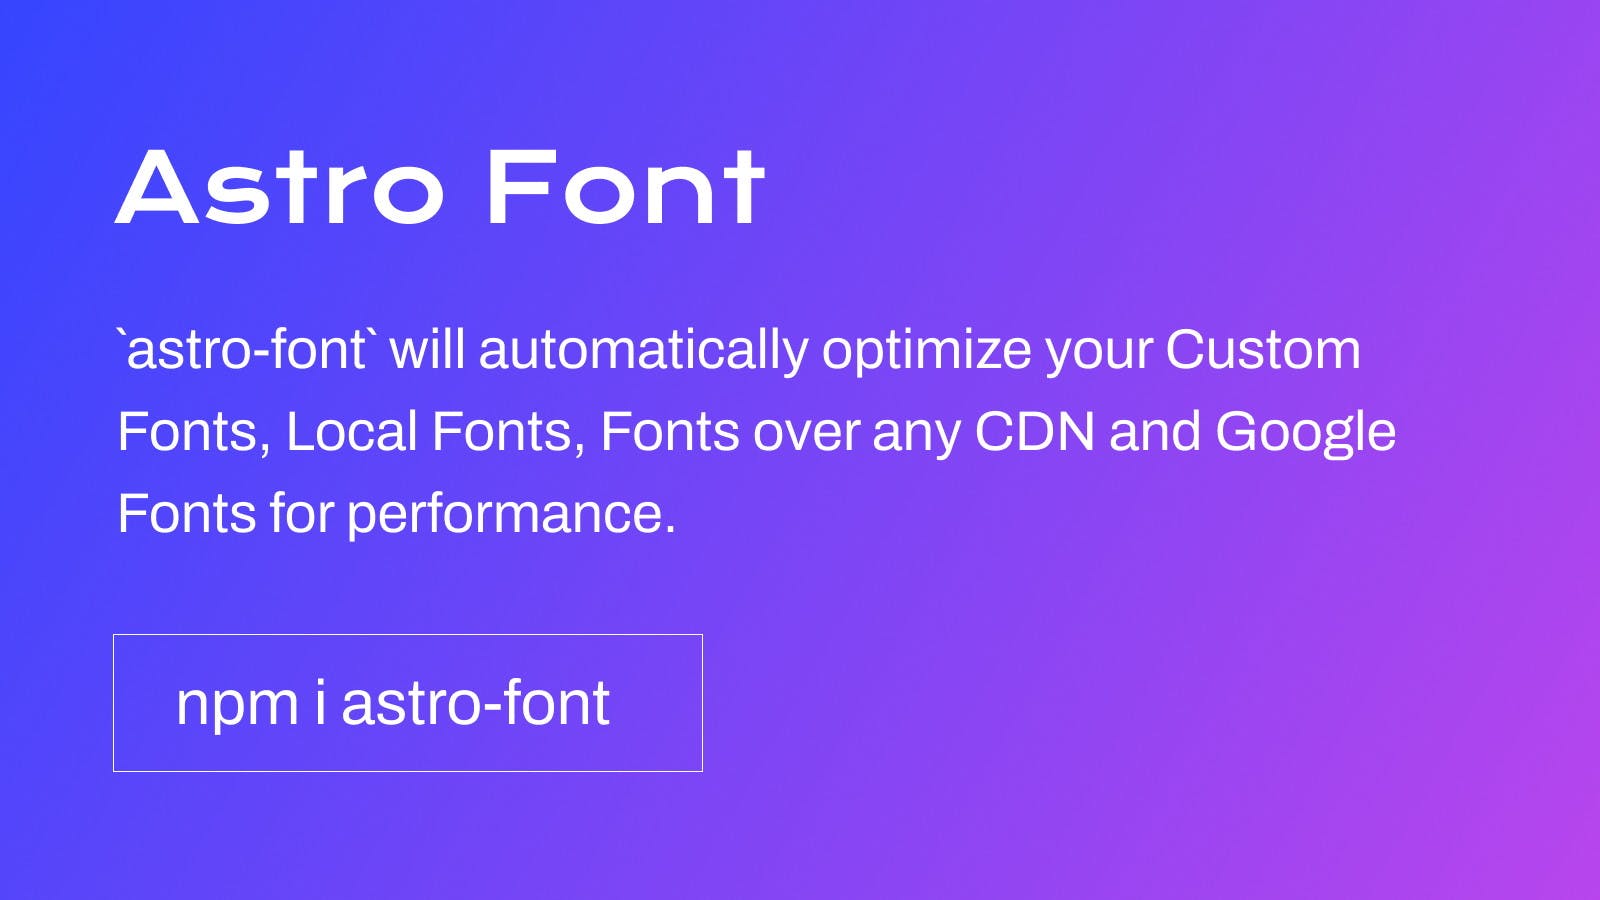 astro-font media 1